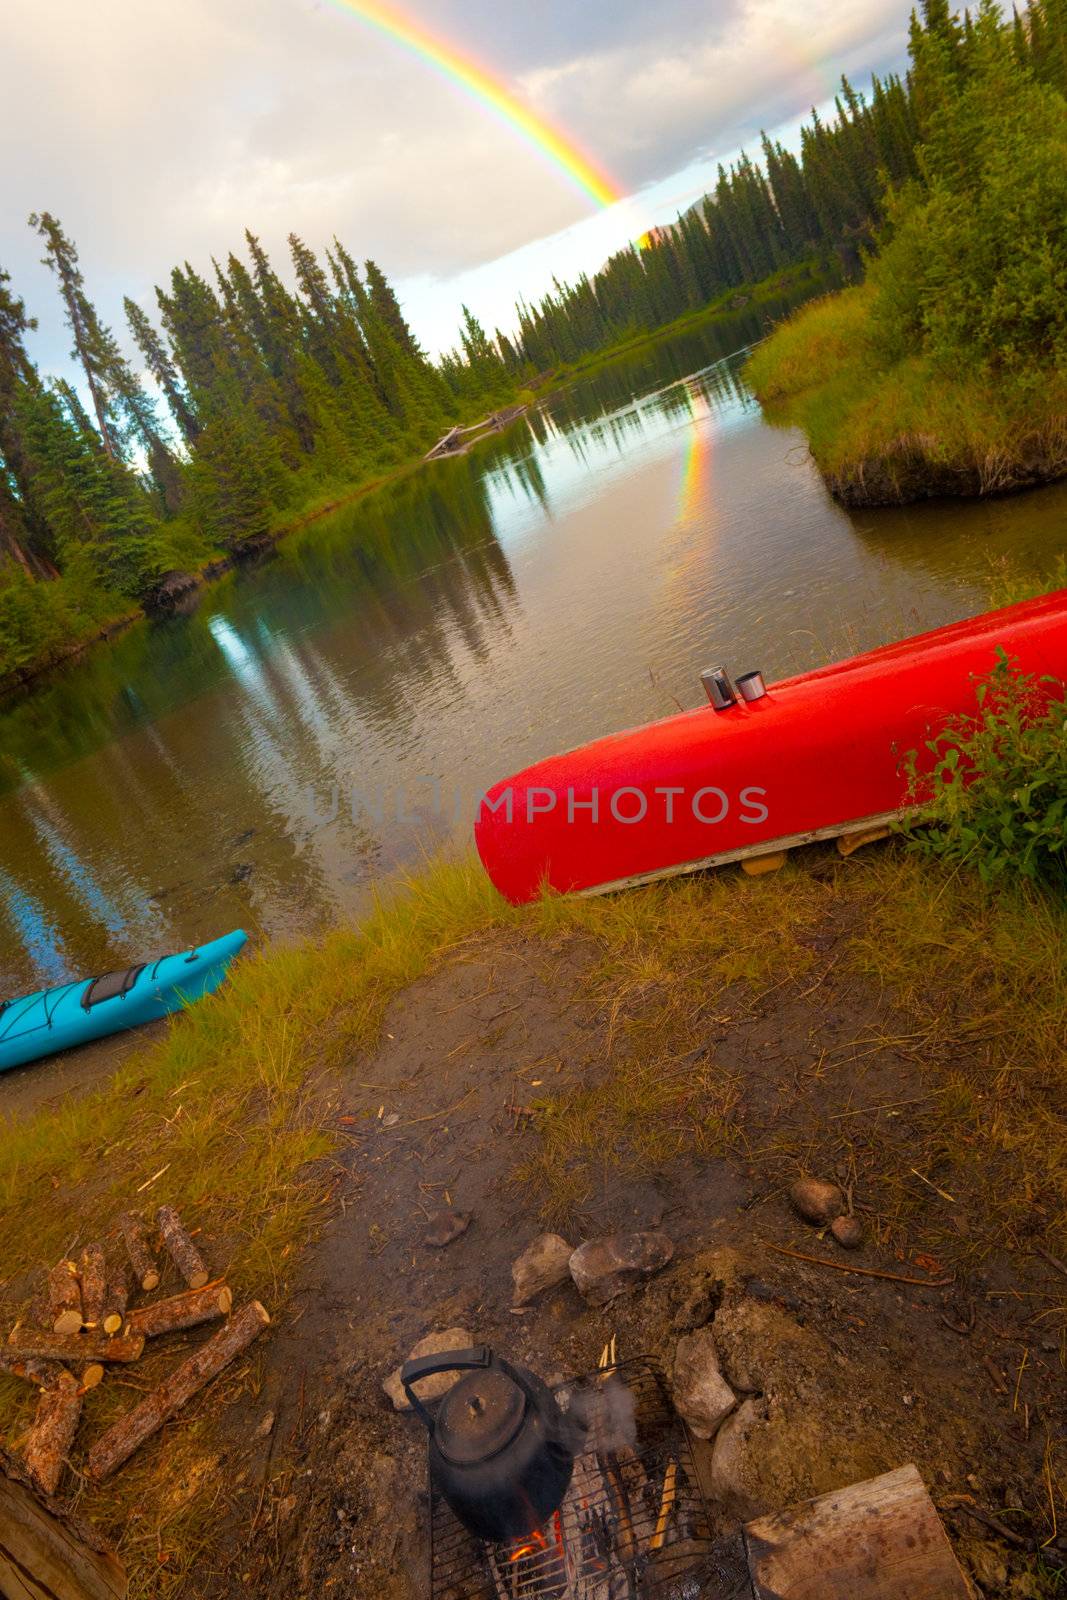 Canoe, Campfire and Rainbow by PiLens